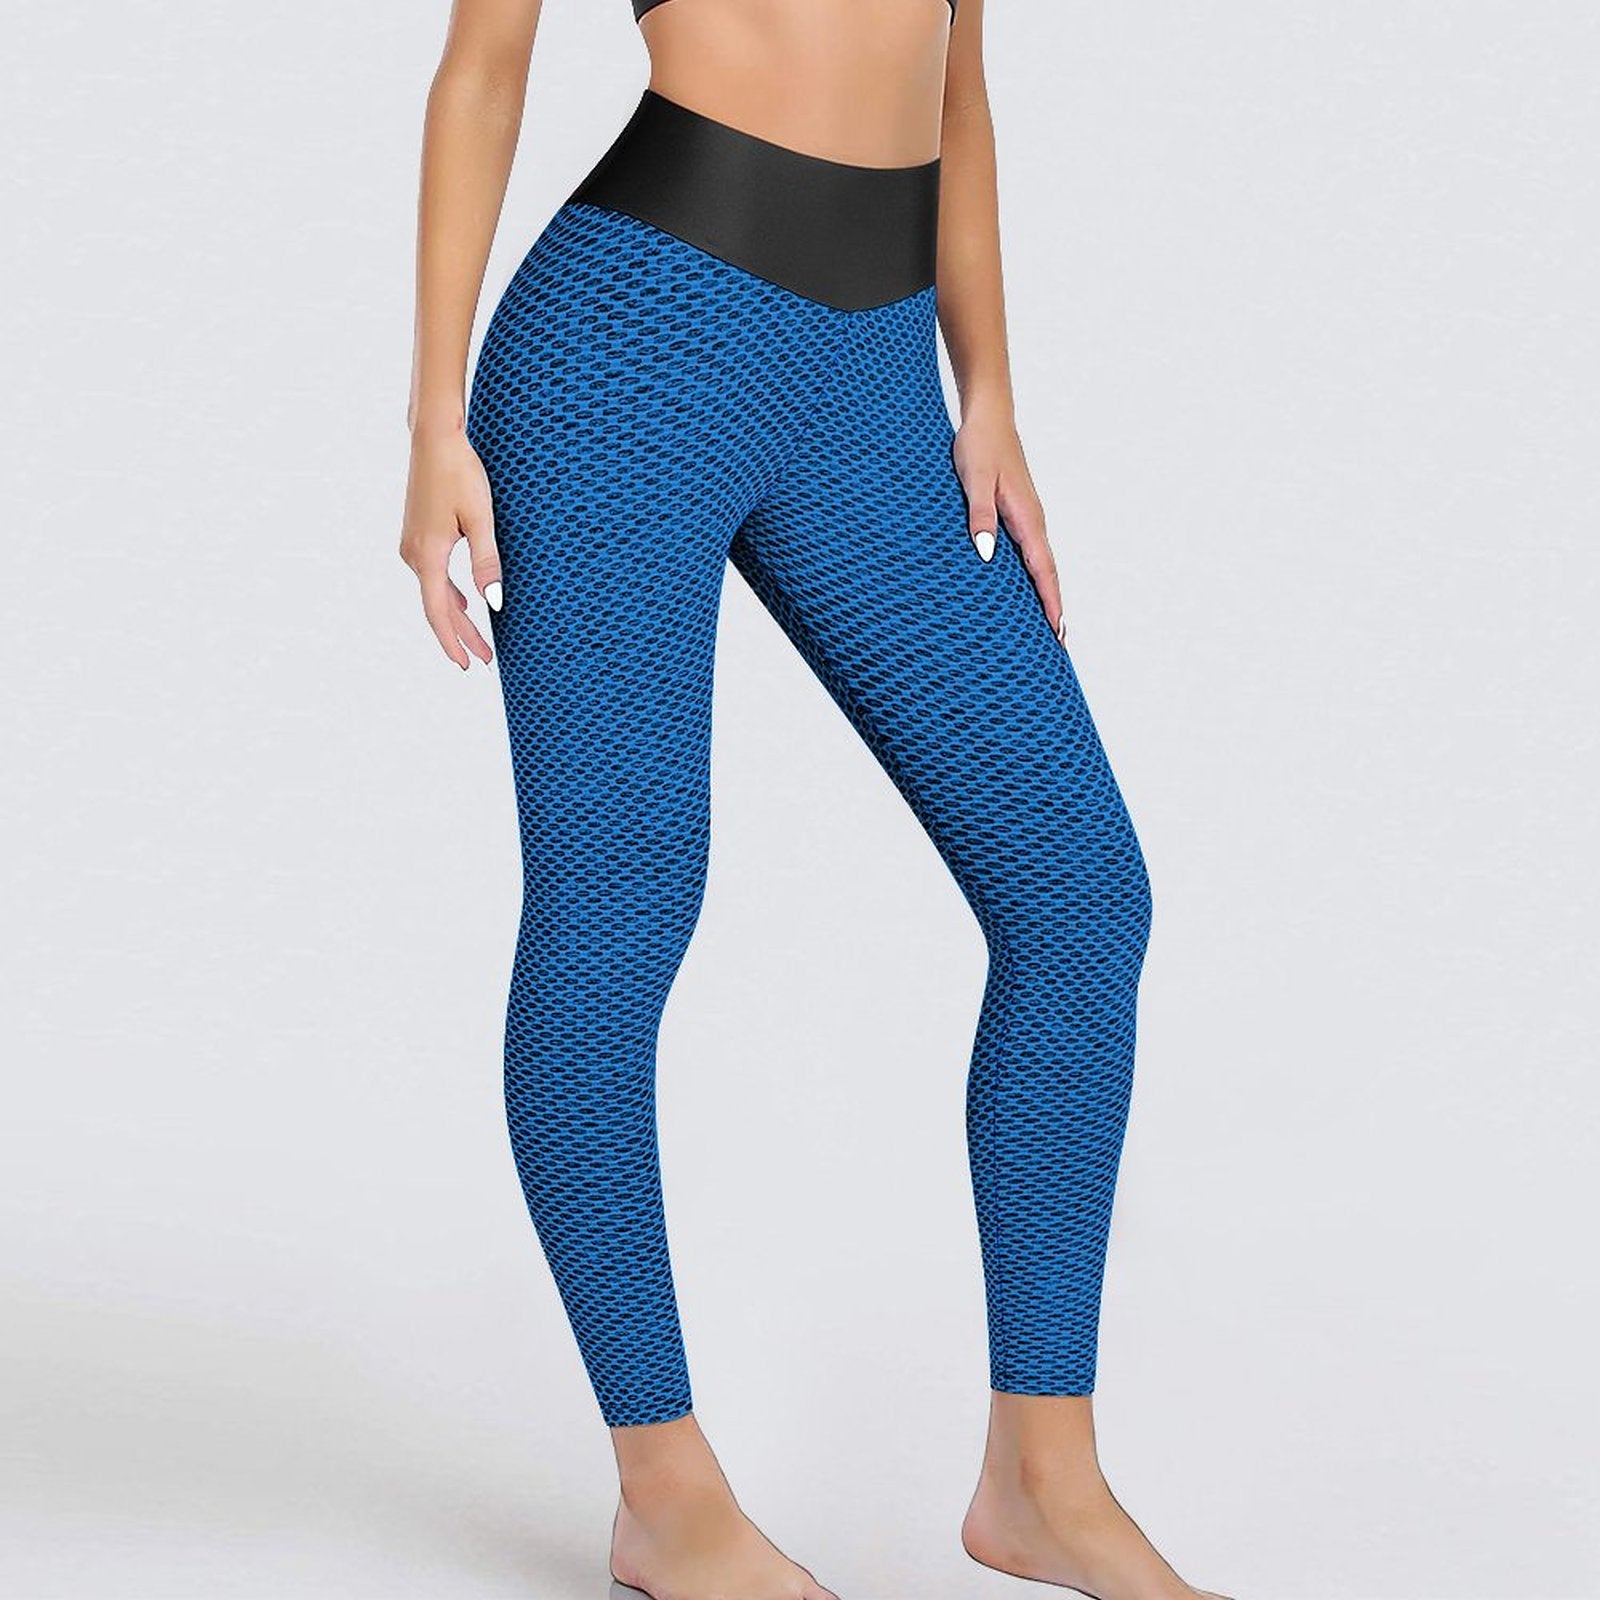 Honeycomb Textured Yoga Pants for Women